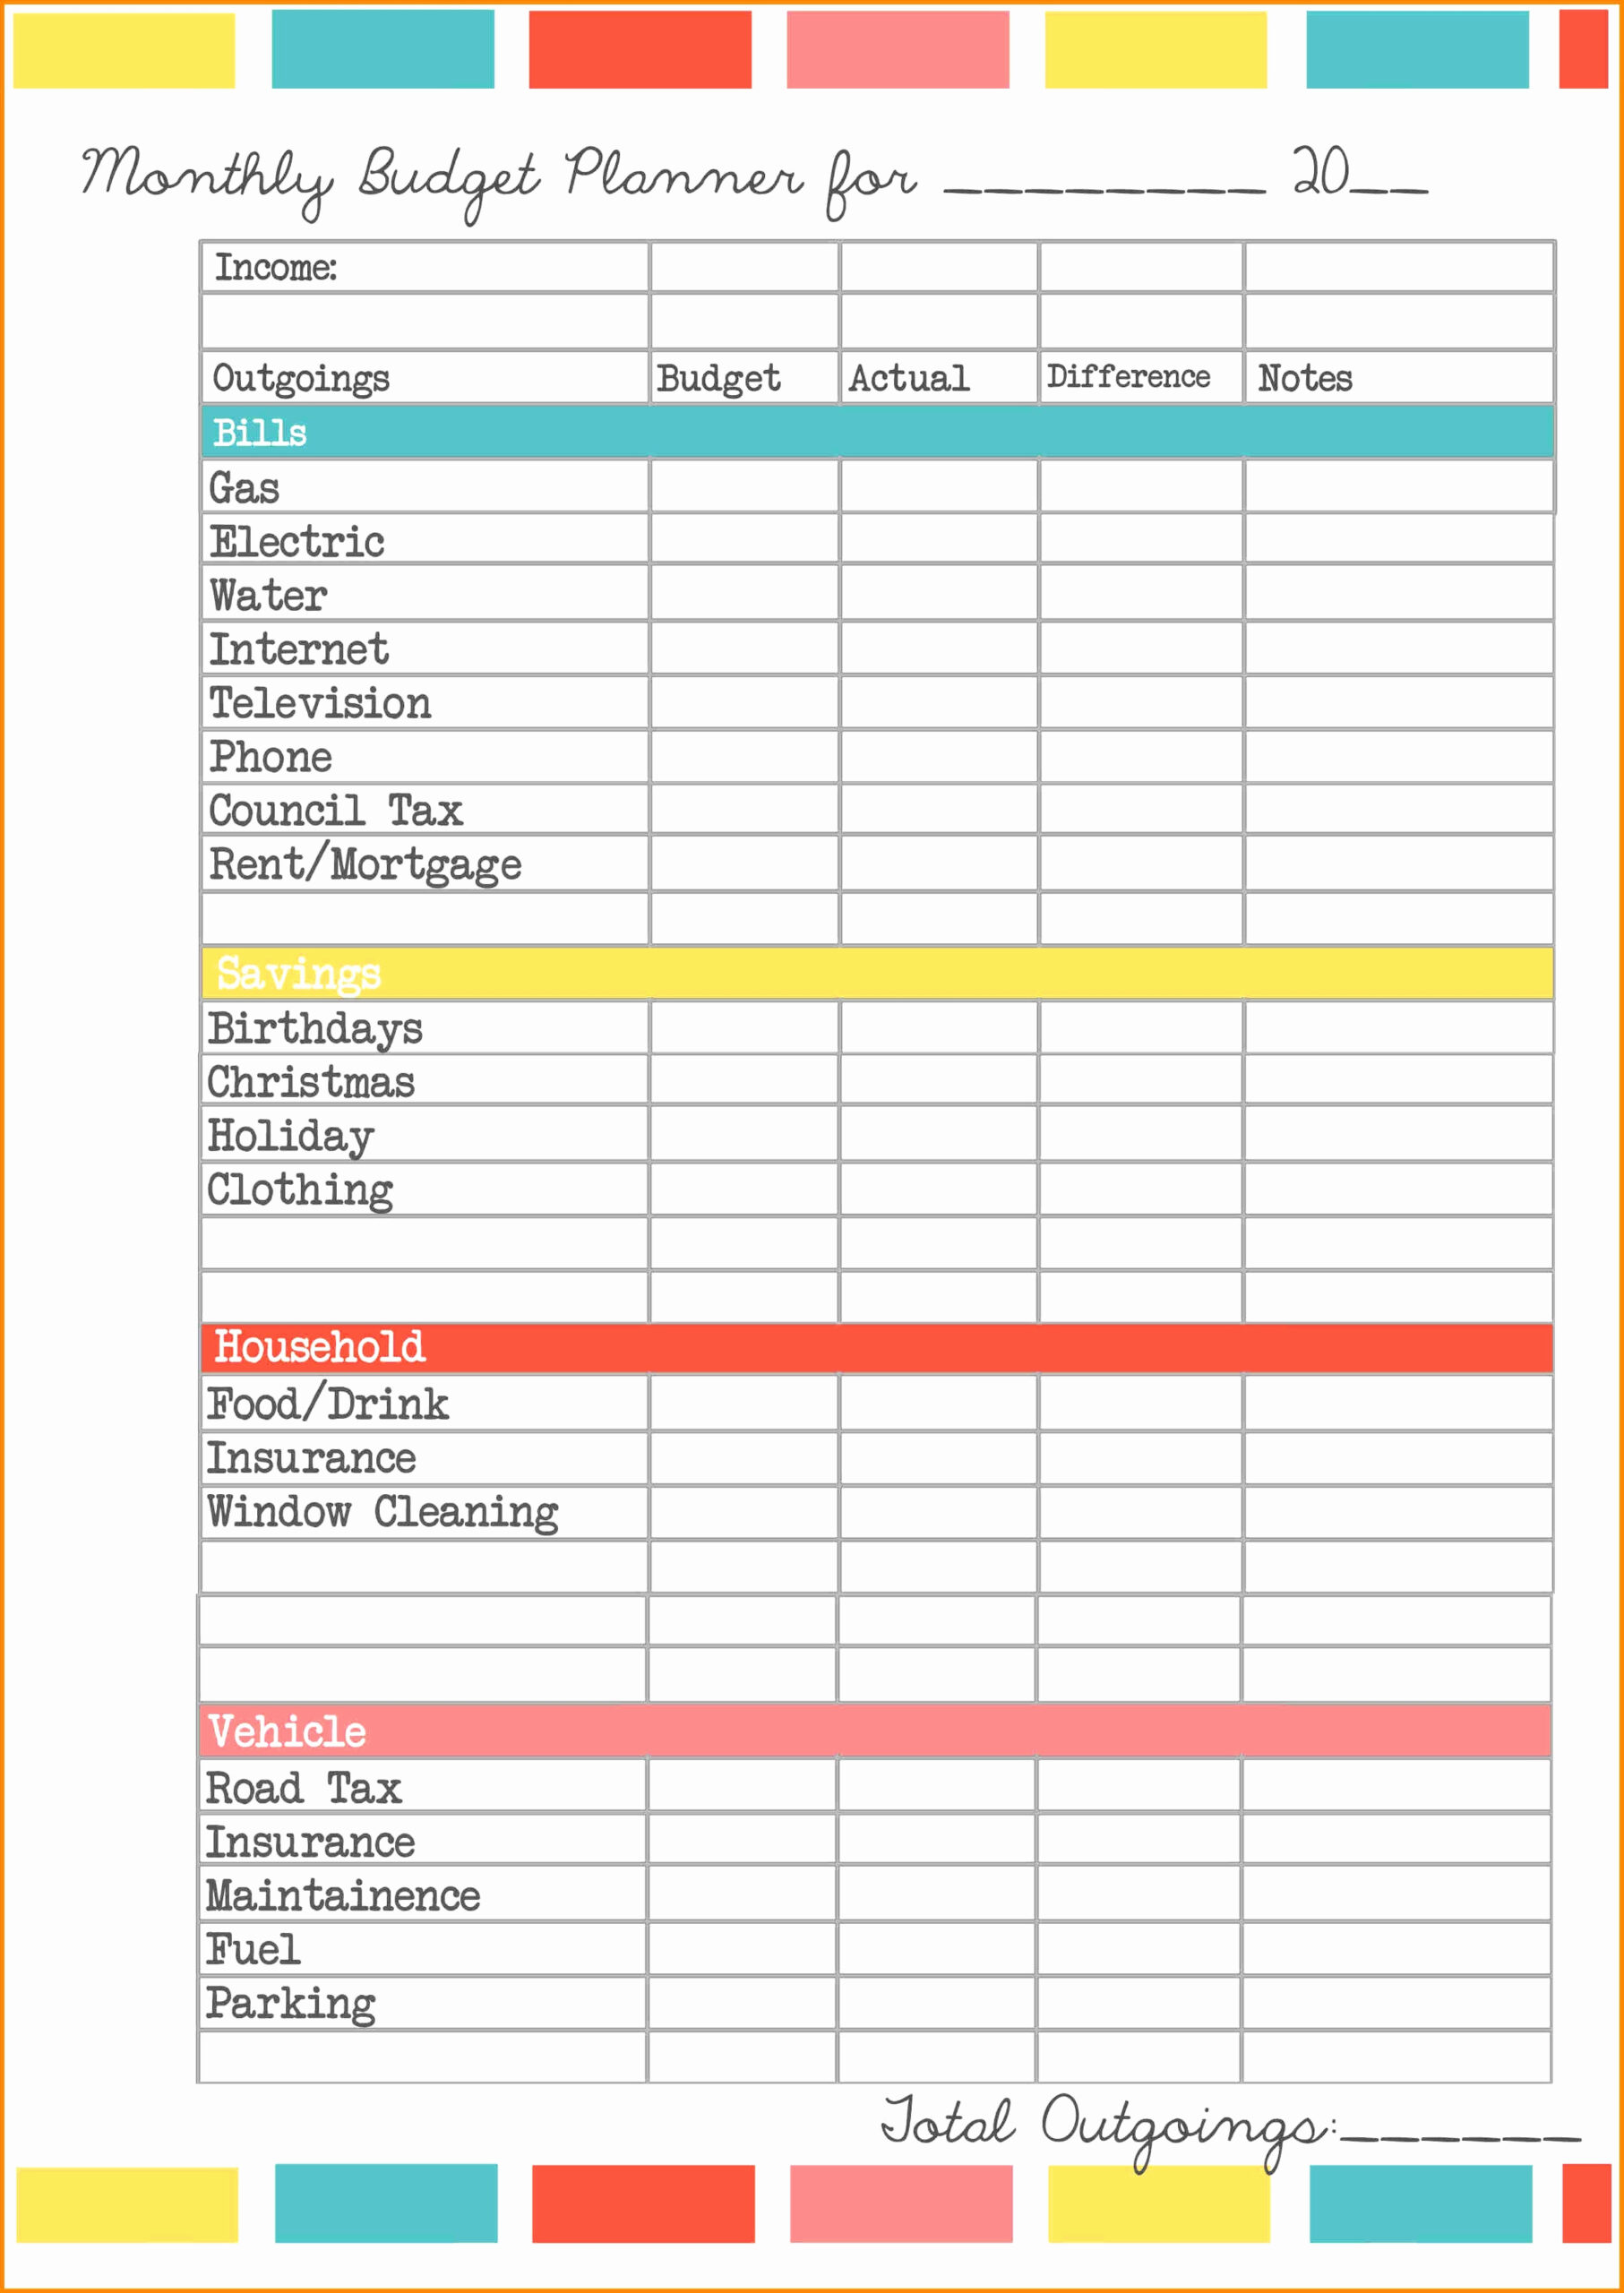 Monthly Bill Schedule Template | Example Calendar Printable in Bill Calendar Template